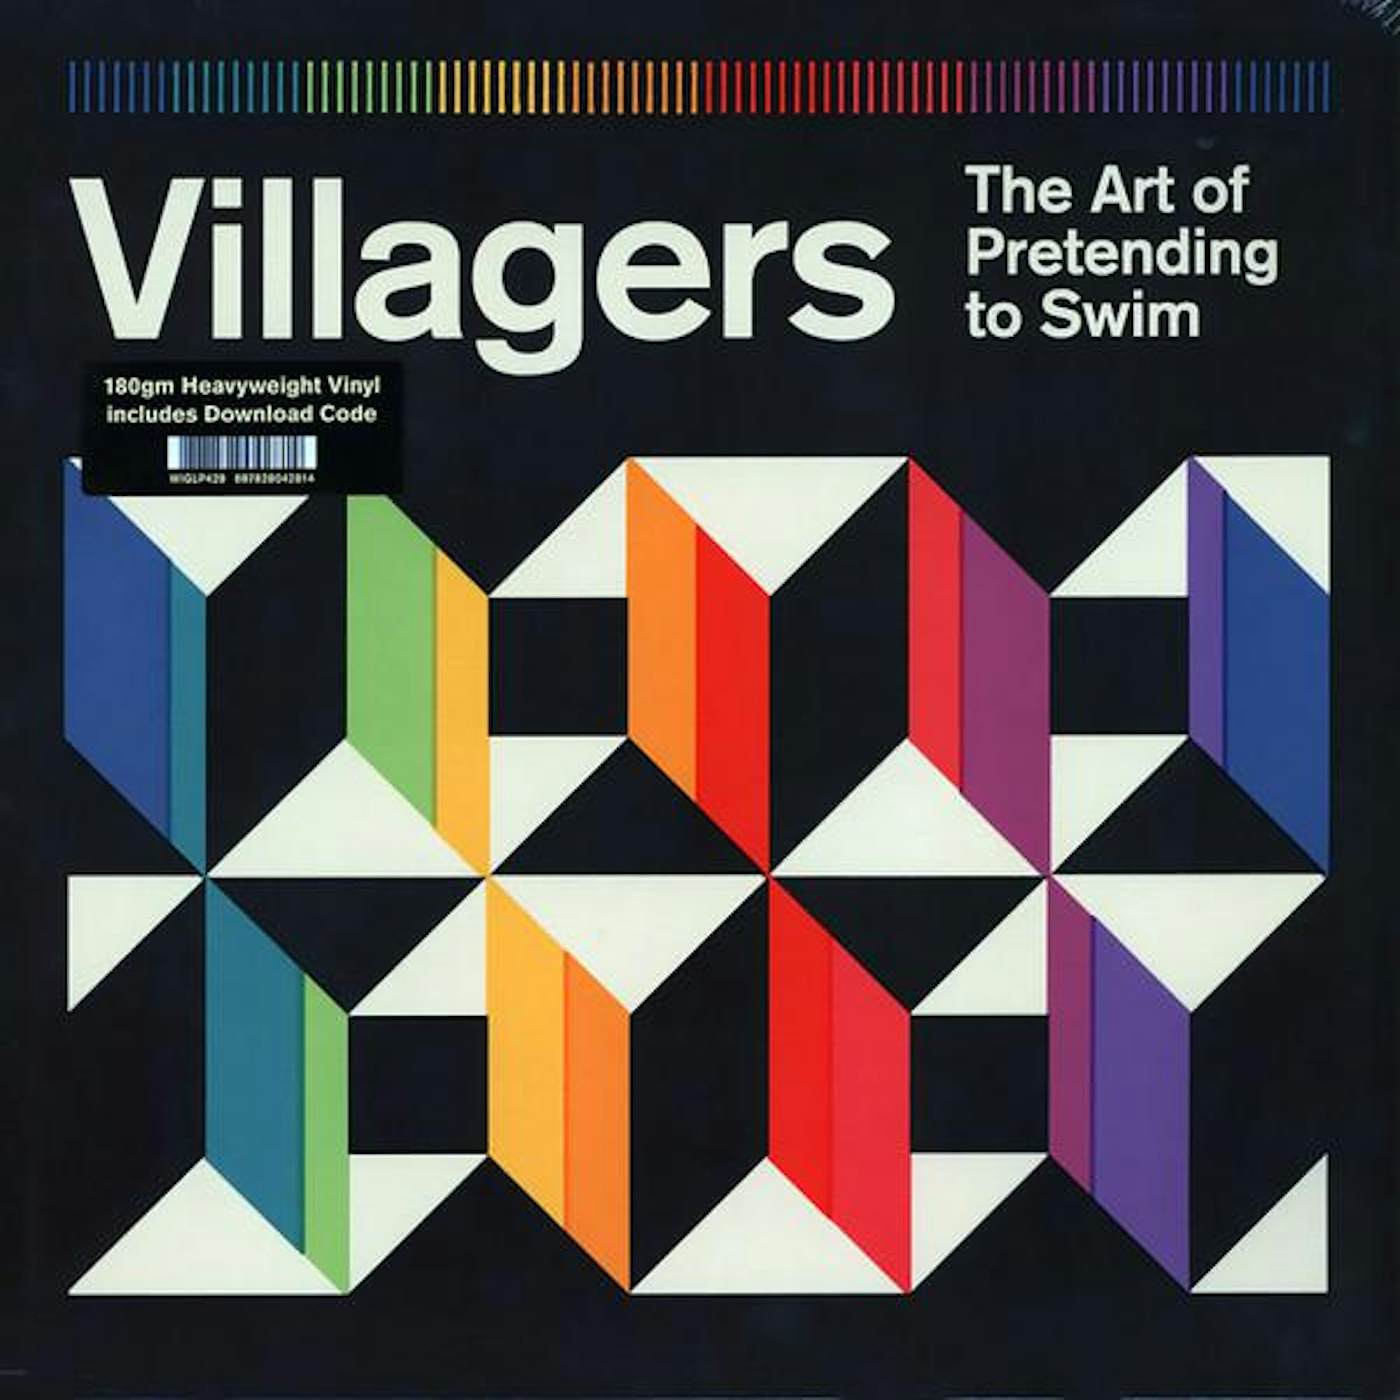 Villagers ART OF PRETENDING TO SWIM (DL CARD) Vinyl Record